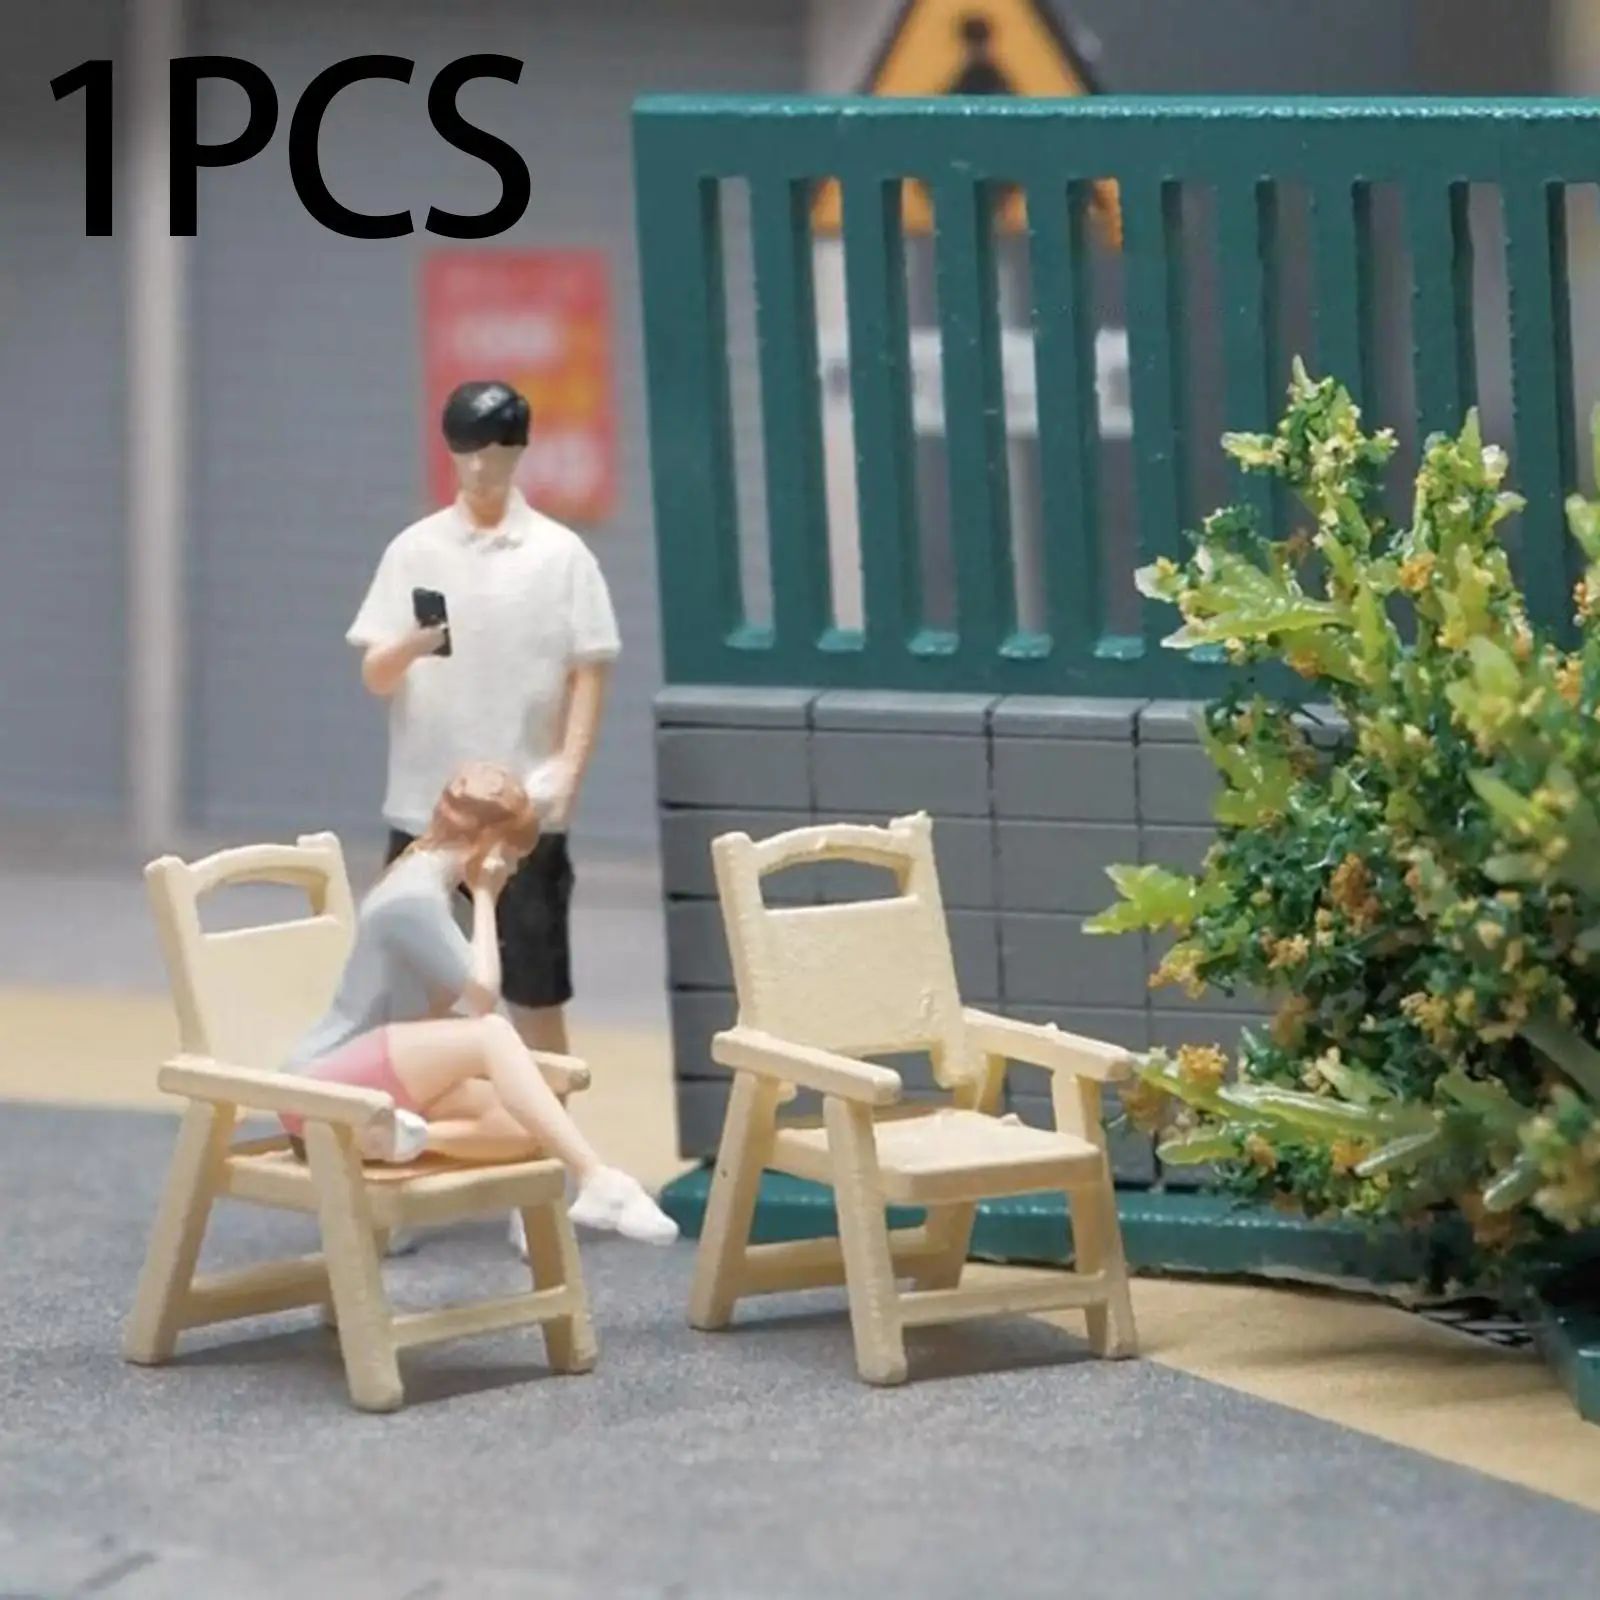 Miniature figure/64 Scale Miniature Scenes Doll Toy for Micro Landscape Architecture Model Collections Desktop Ornament People